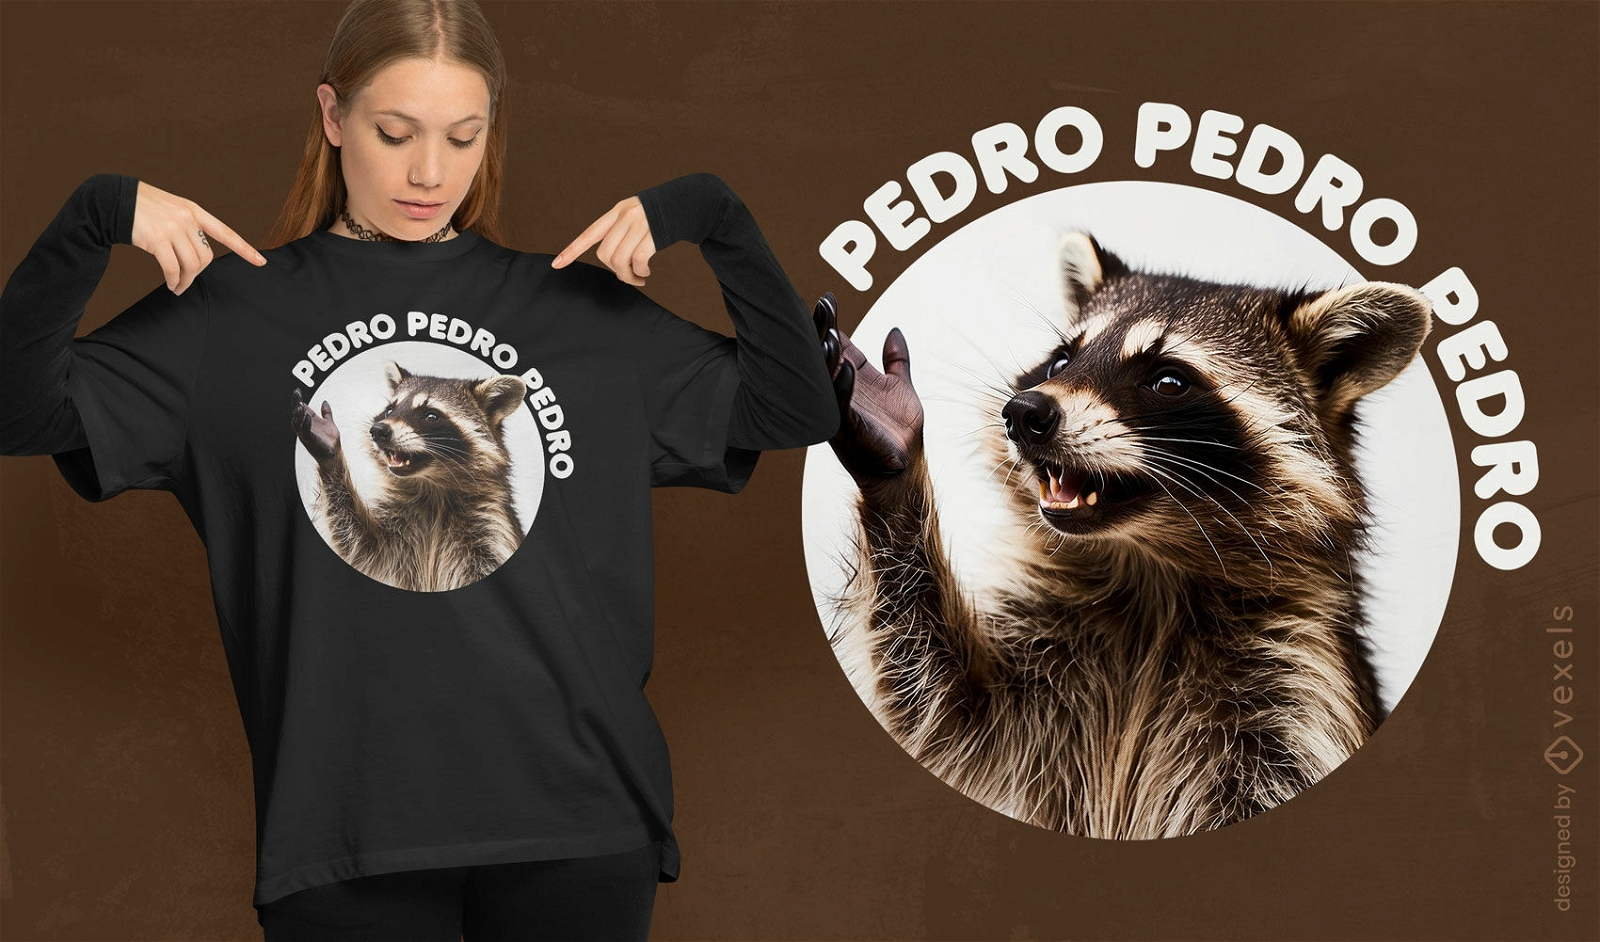 Raccoon Pedro quote t-shirt design